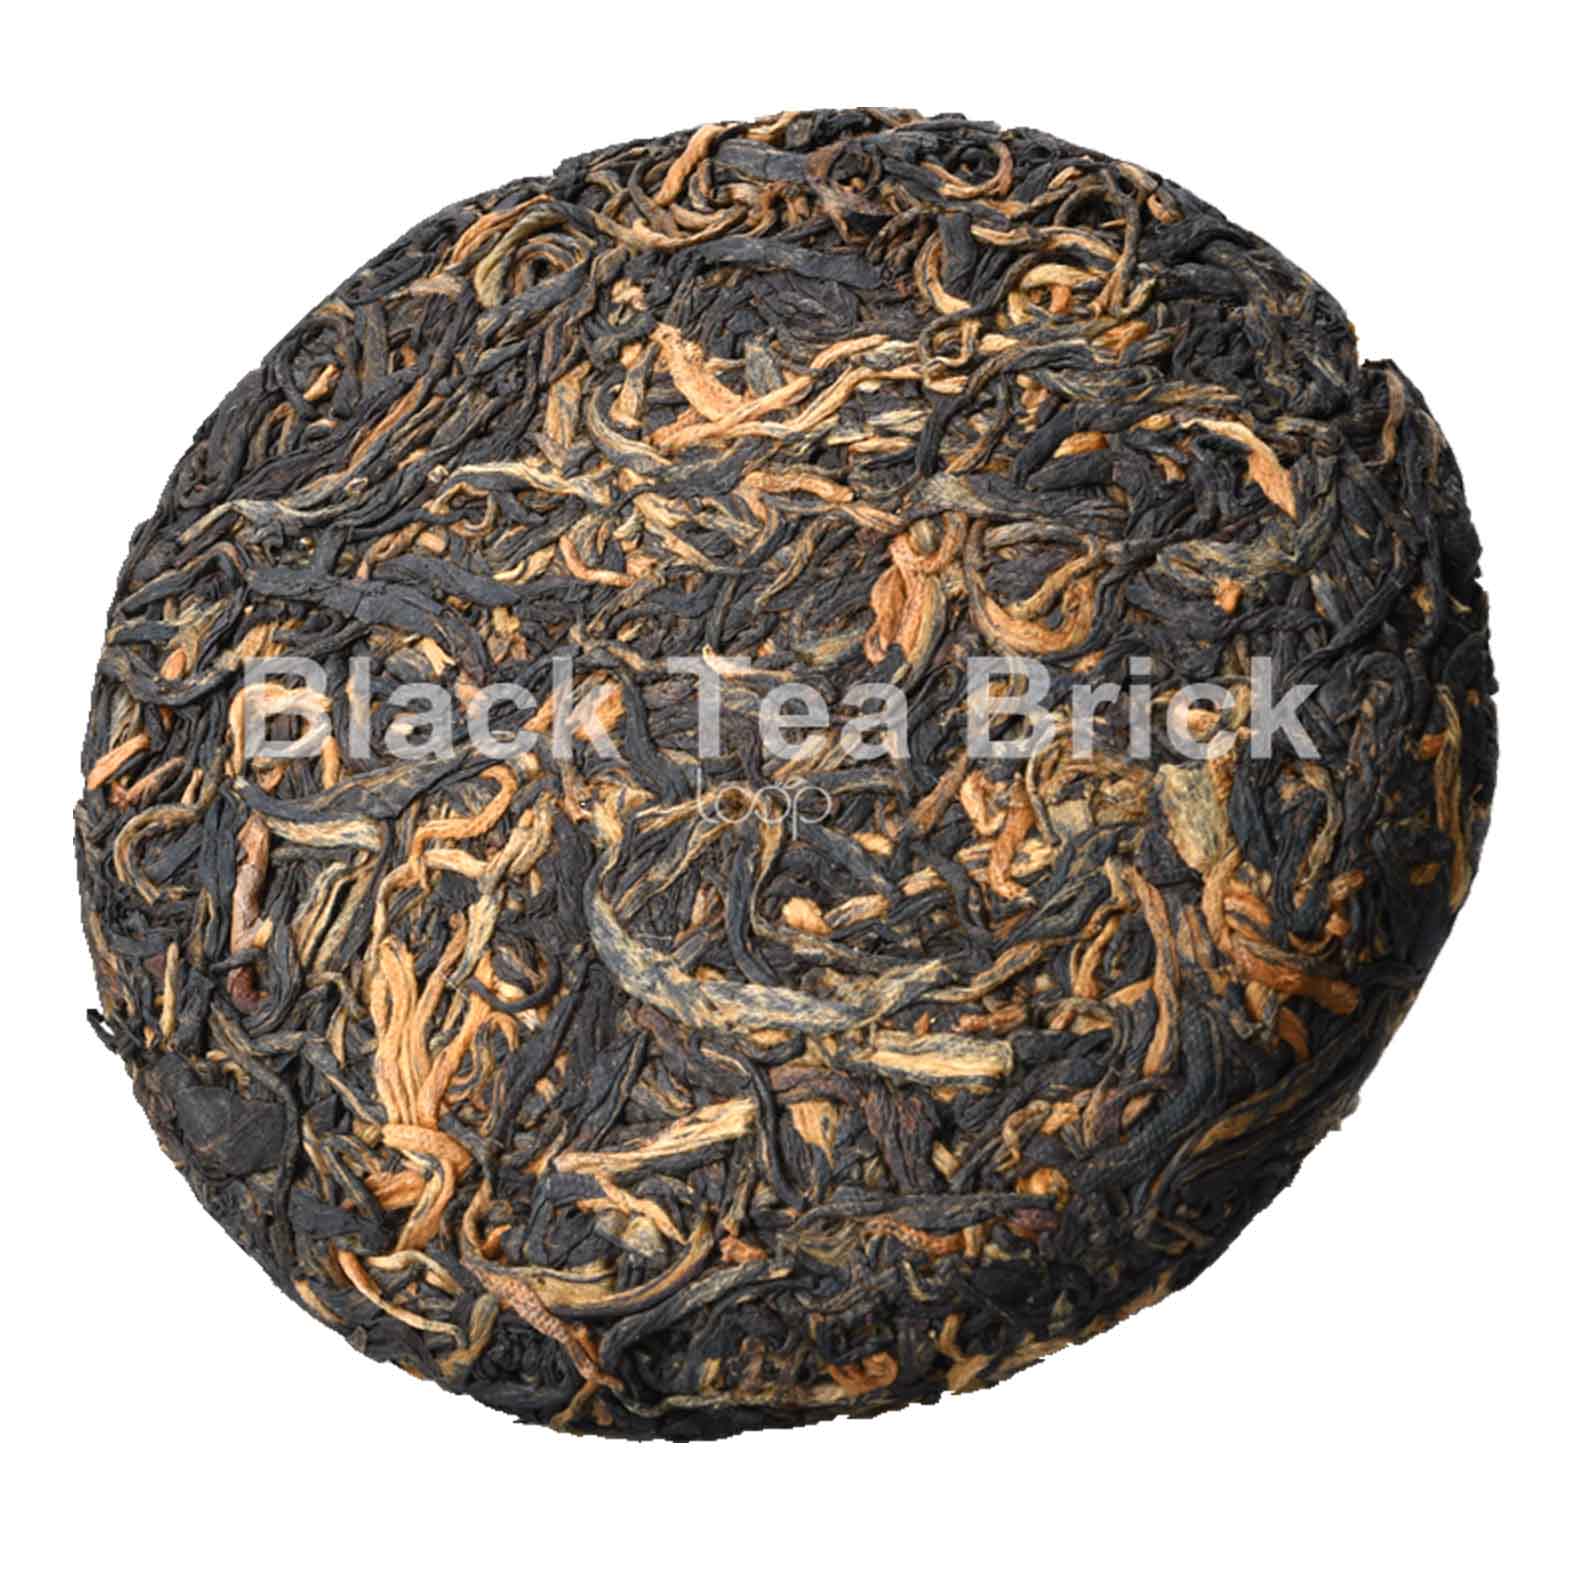 Tea Bricks Compressed Black Tea Cake